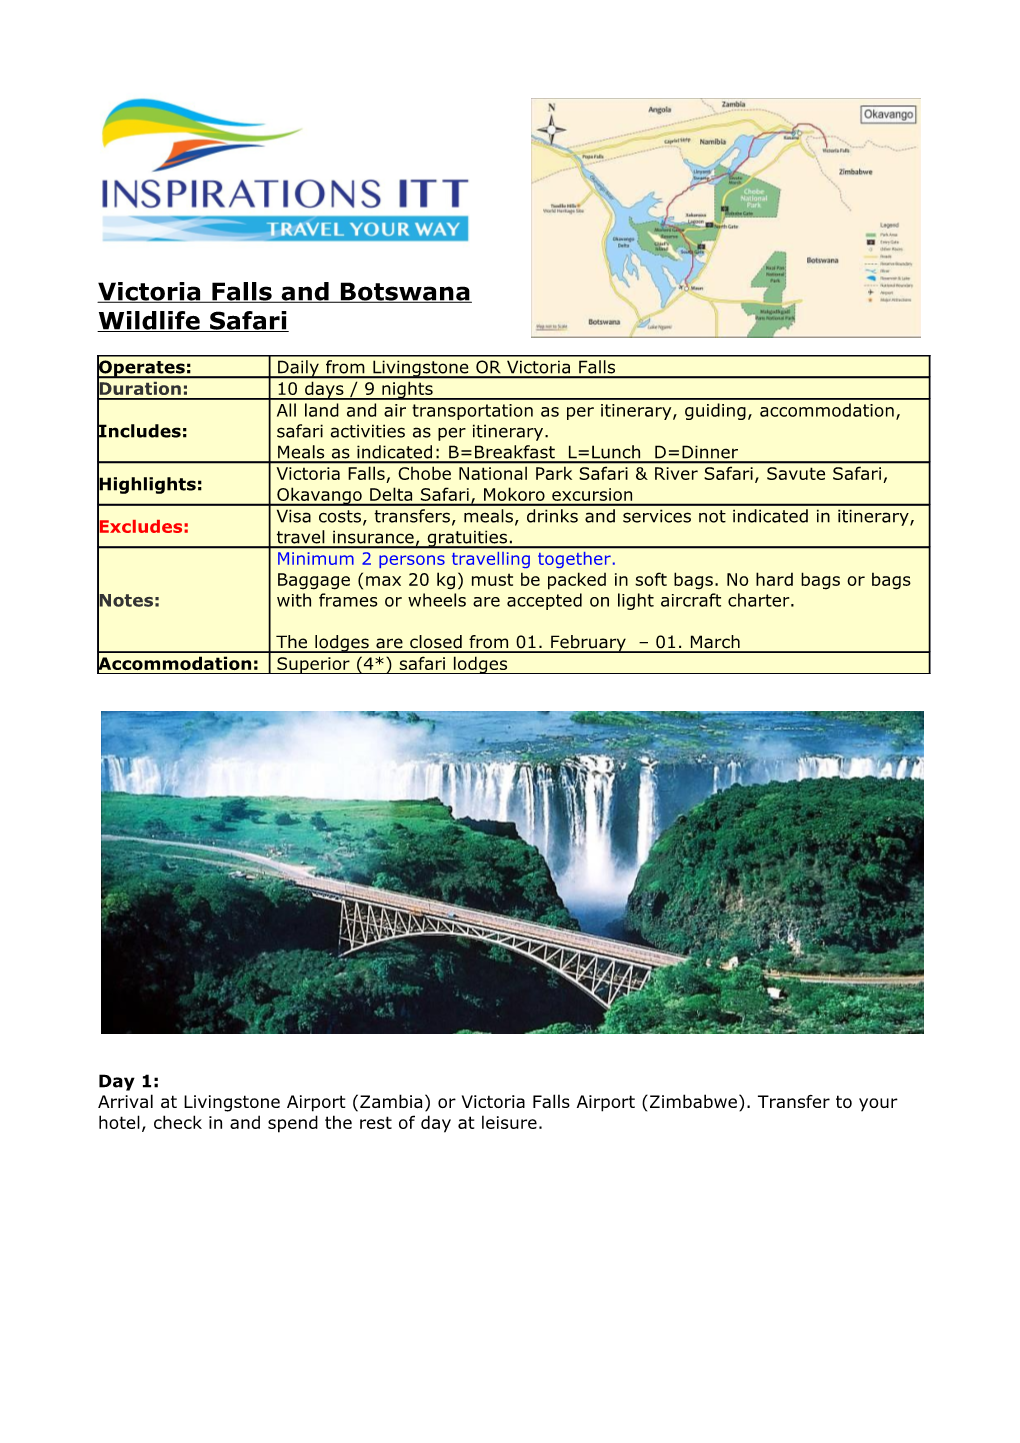 Victoria Falls and Botswana Wildlife Safari